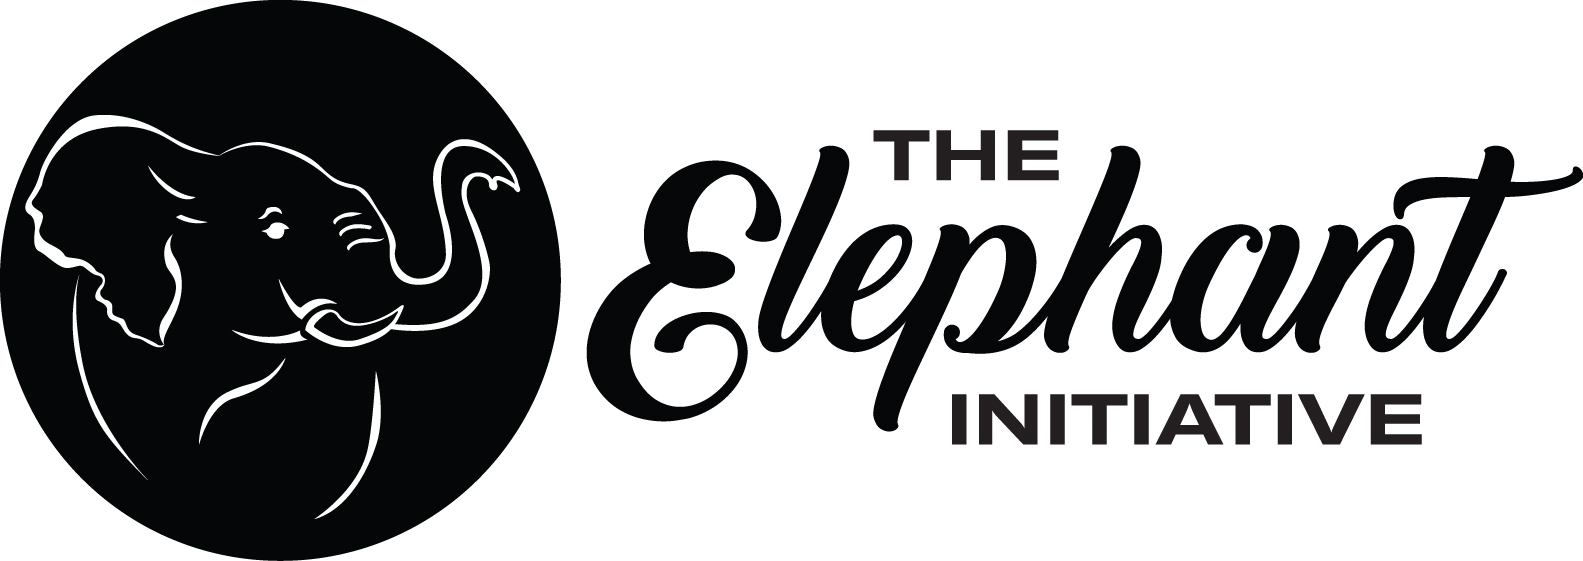 The Elephant Initiative logo